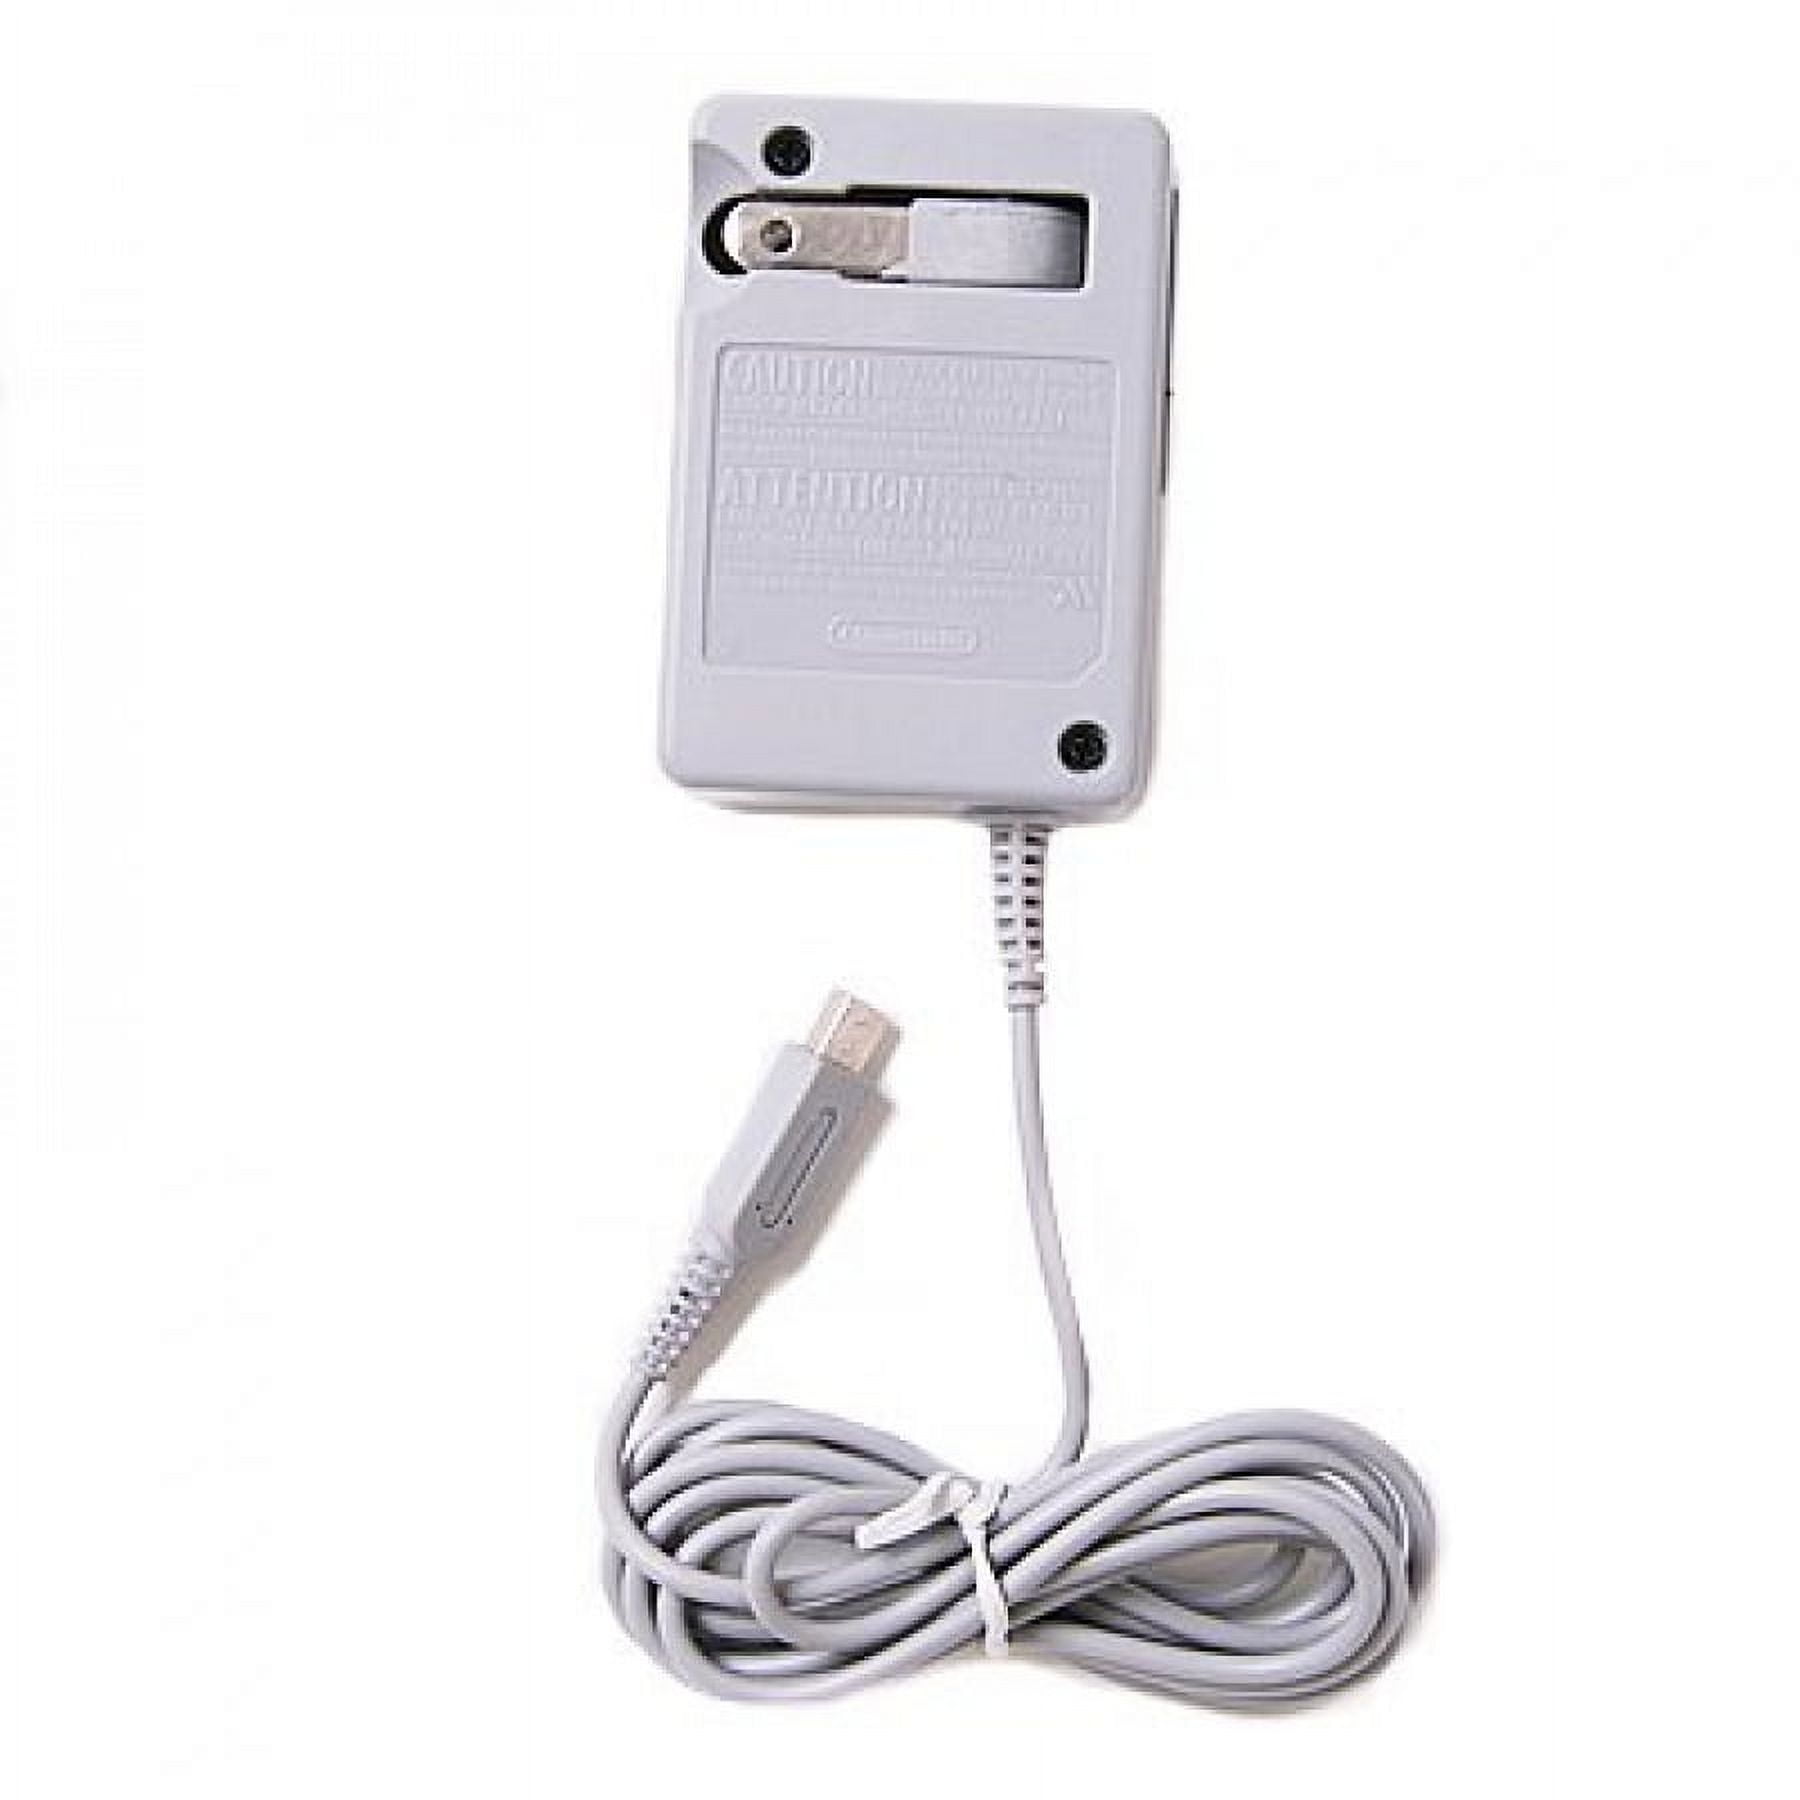 Nintendo DSi NDSi AC Adapter Charger WAP-002 Compatible 110 - 240V